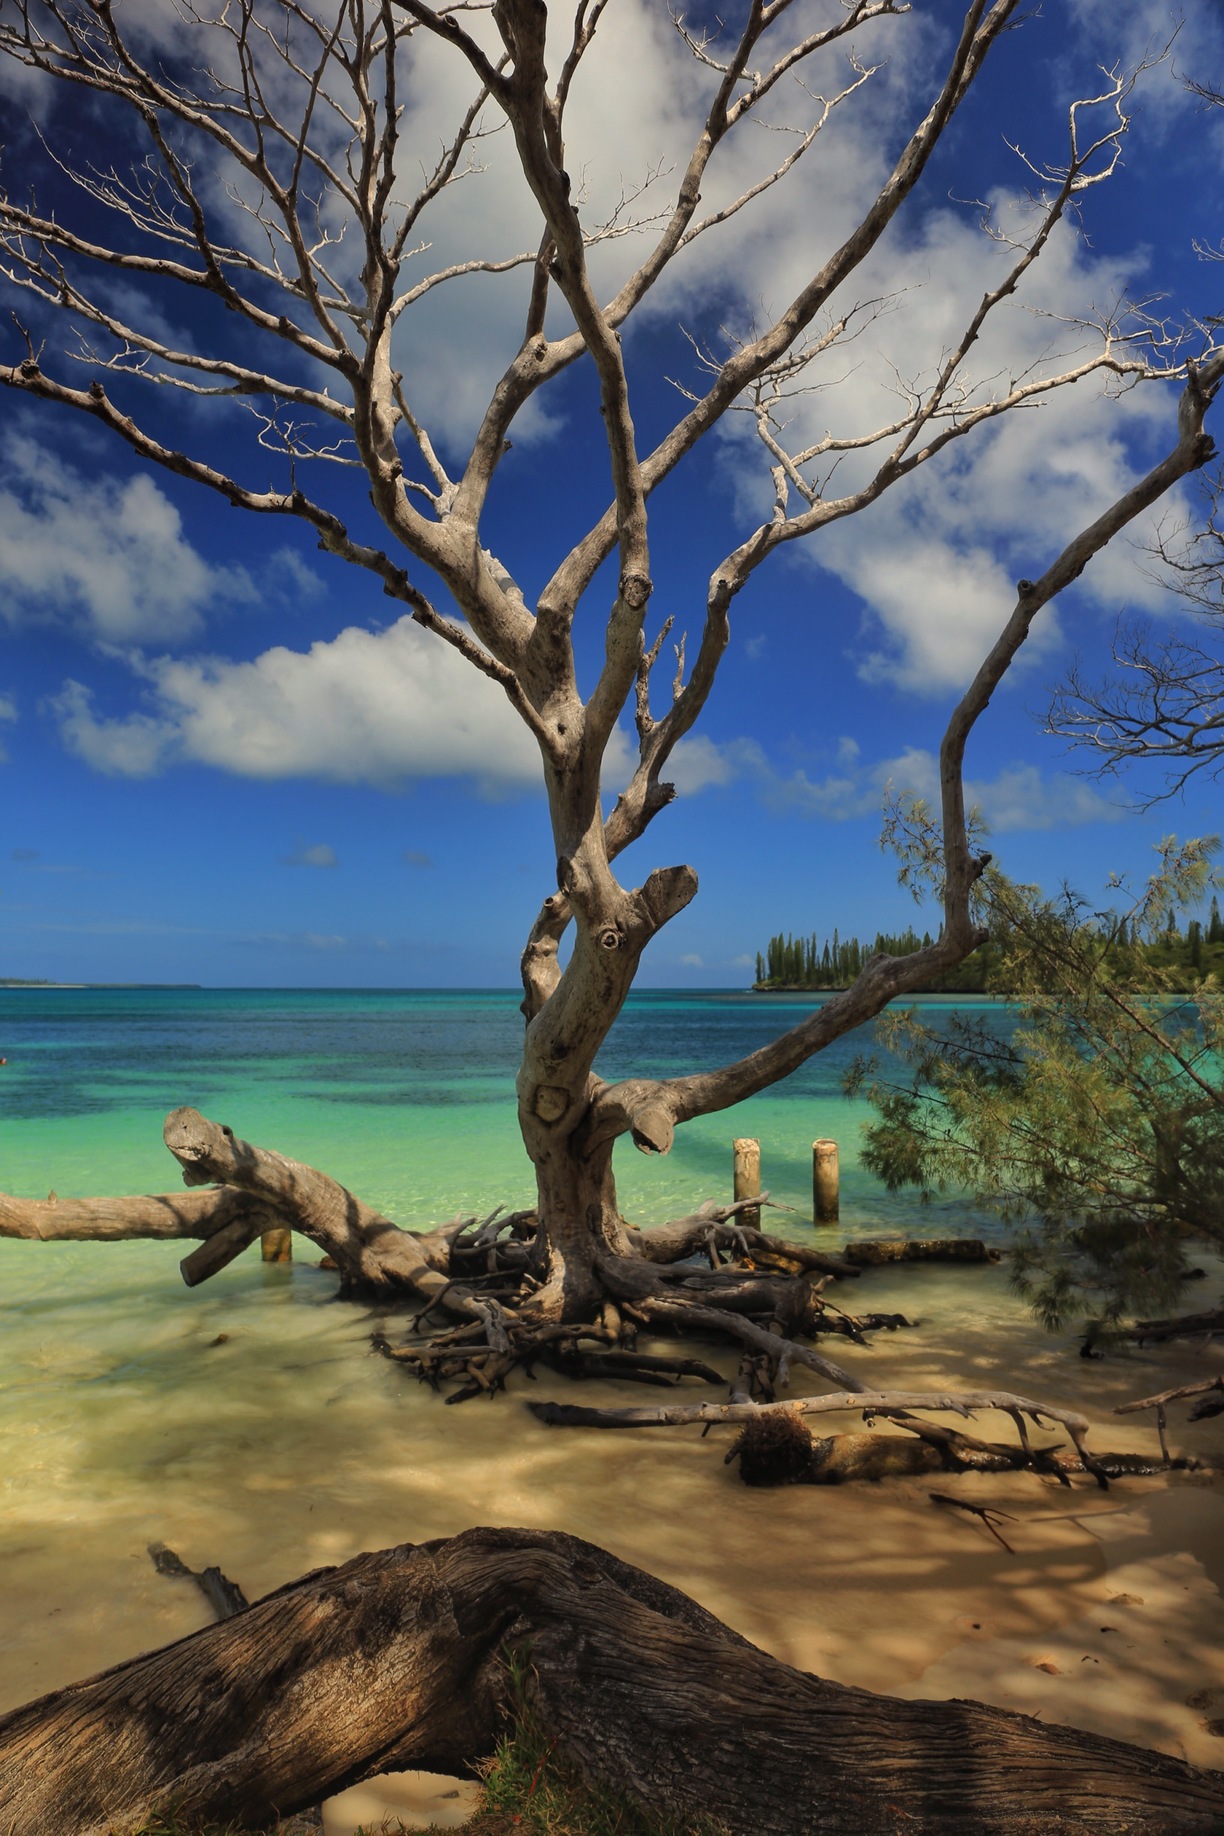 Isle of Pines, New Caledonia - Take me back if I had more time to...